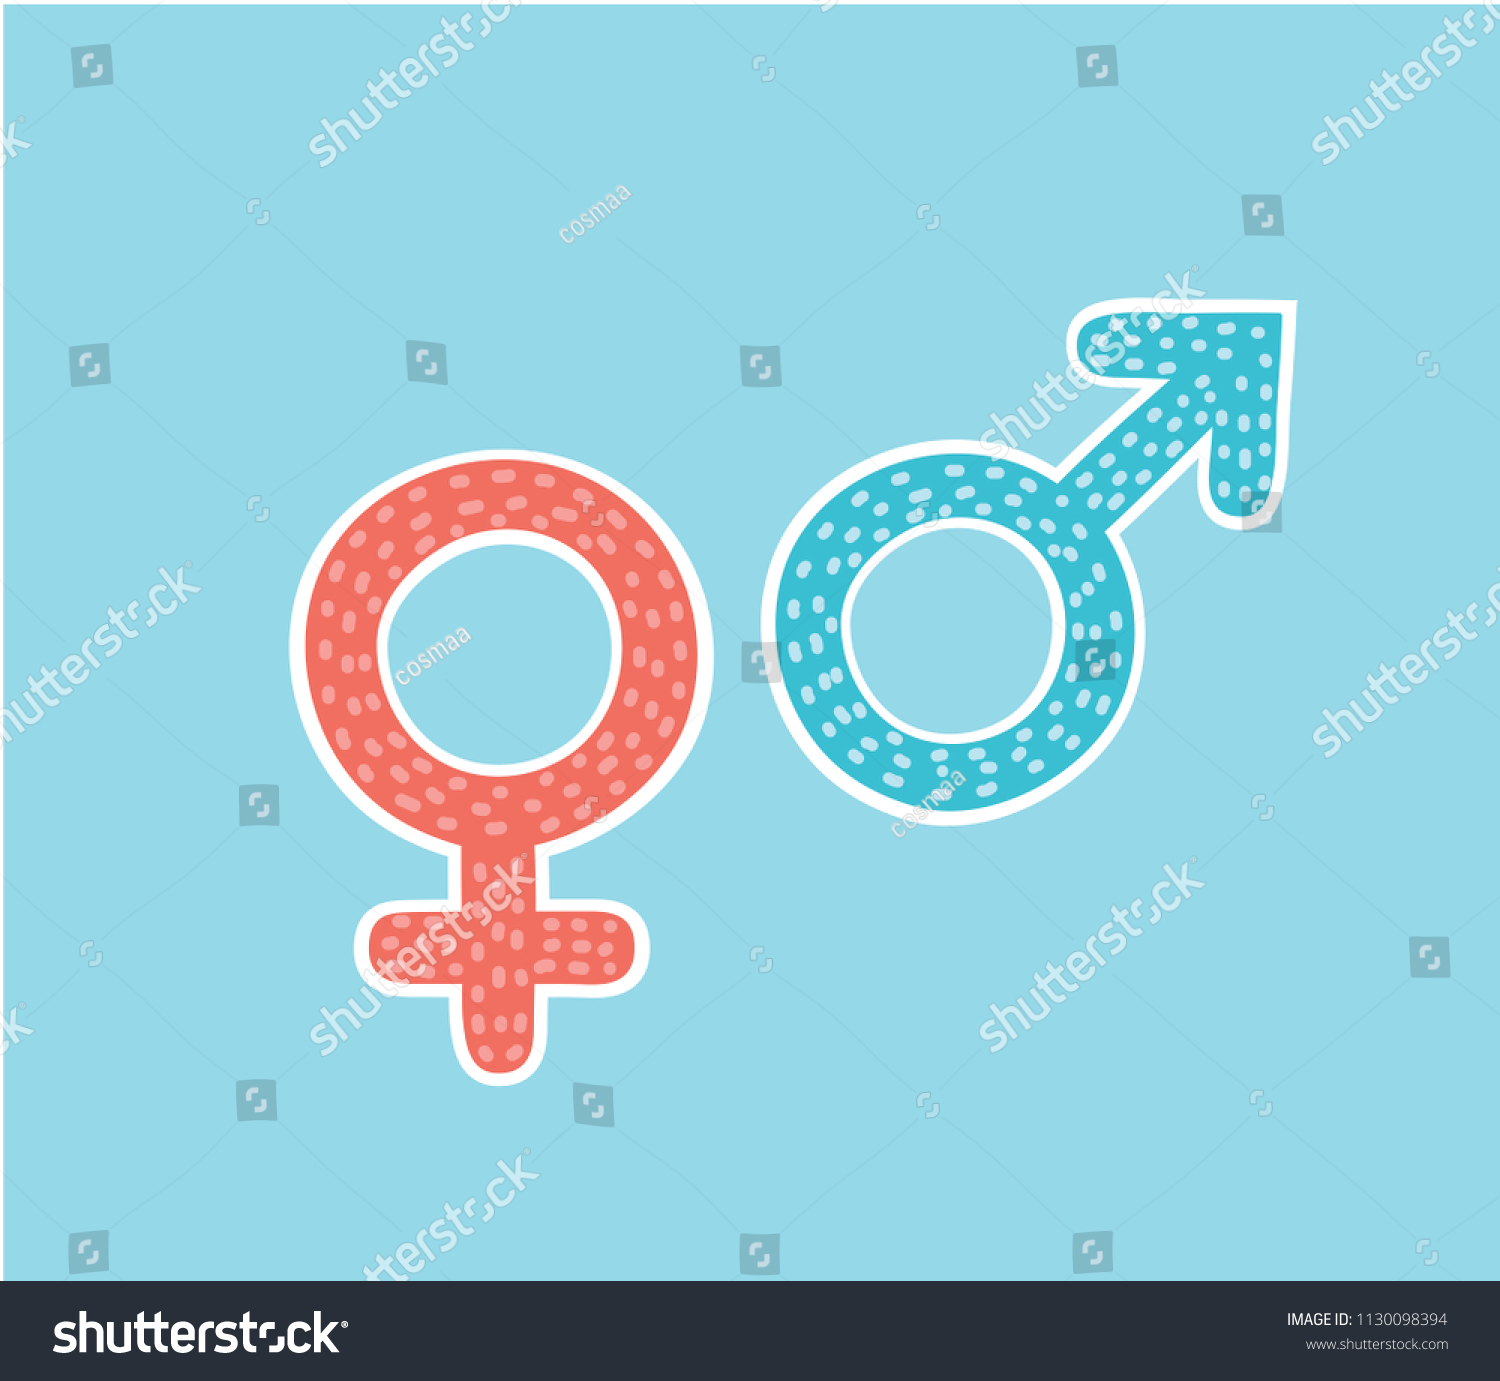 Vector Cartoon Illustration Isolated Gender Pink เวกเตอร์สต็อก ปลอดค่าลิขสิทธิ์ 1130098394